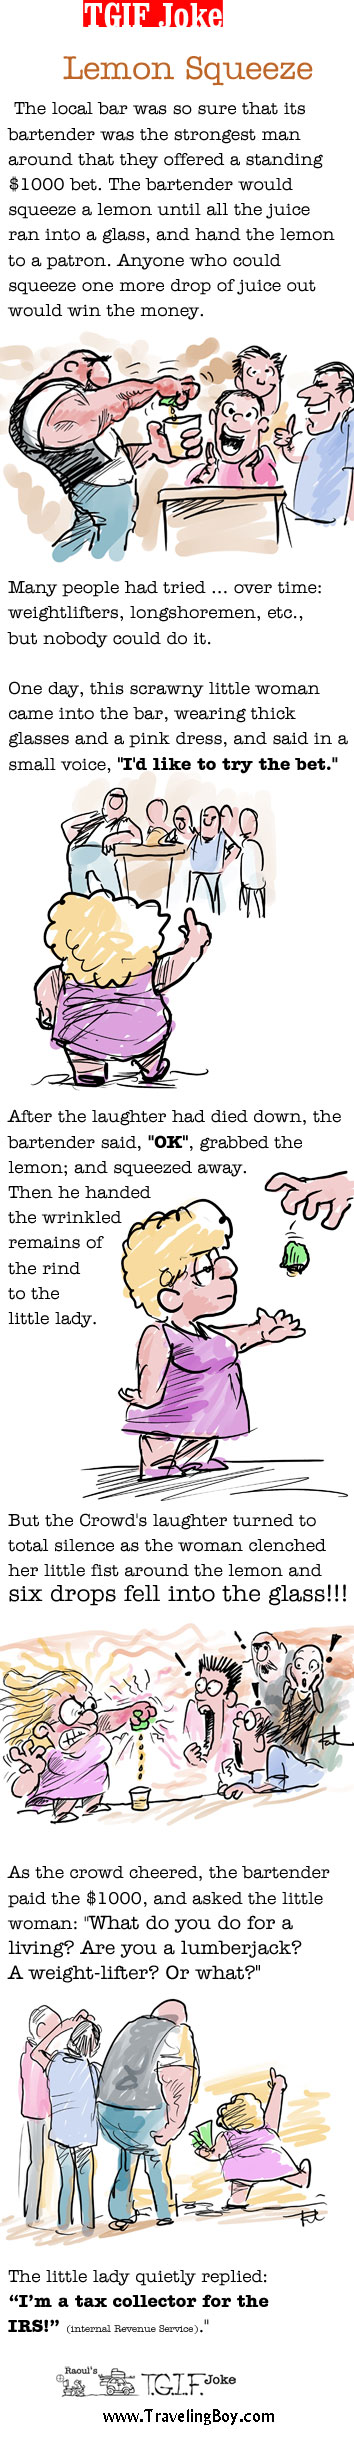 Joke of the Week: Lemon Squeeze